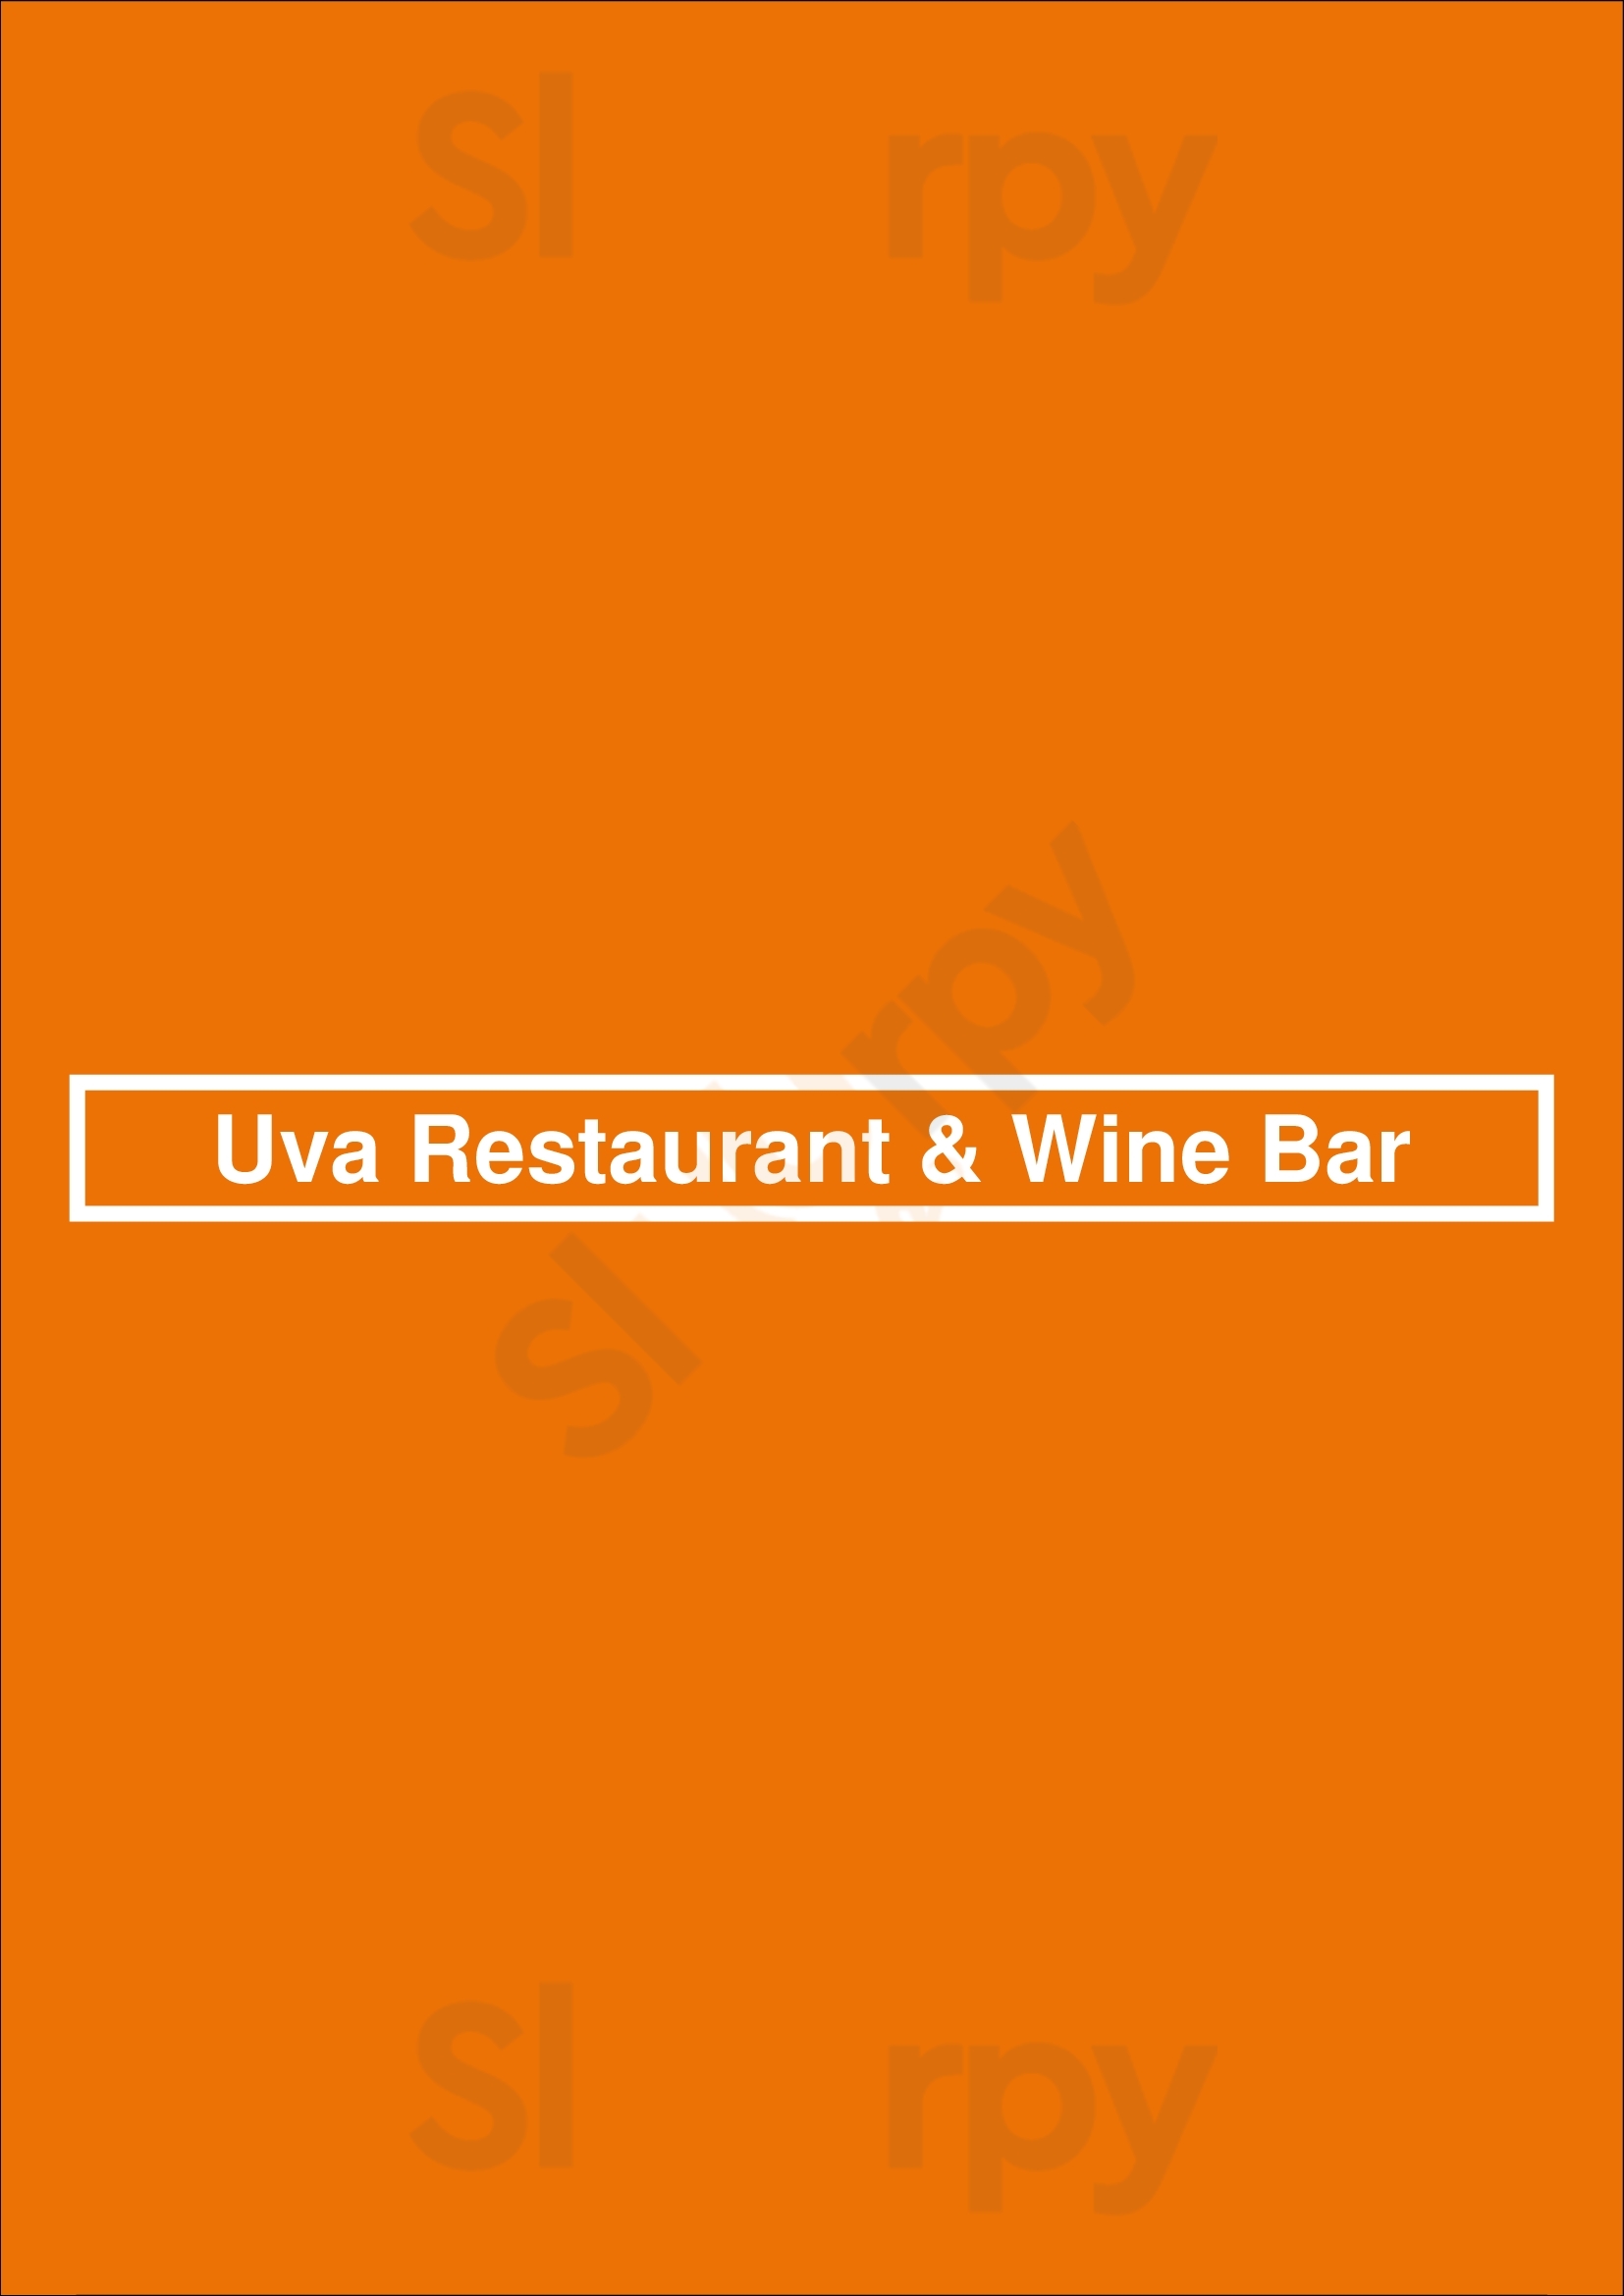 Uva Restaurant & Wine Bar Funchal Menu - 1